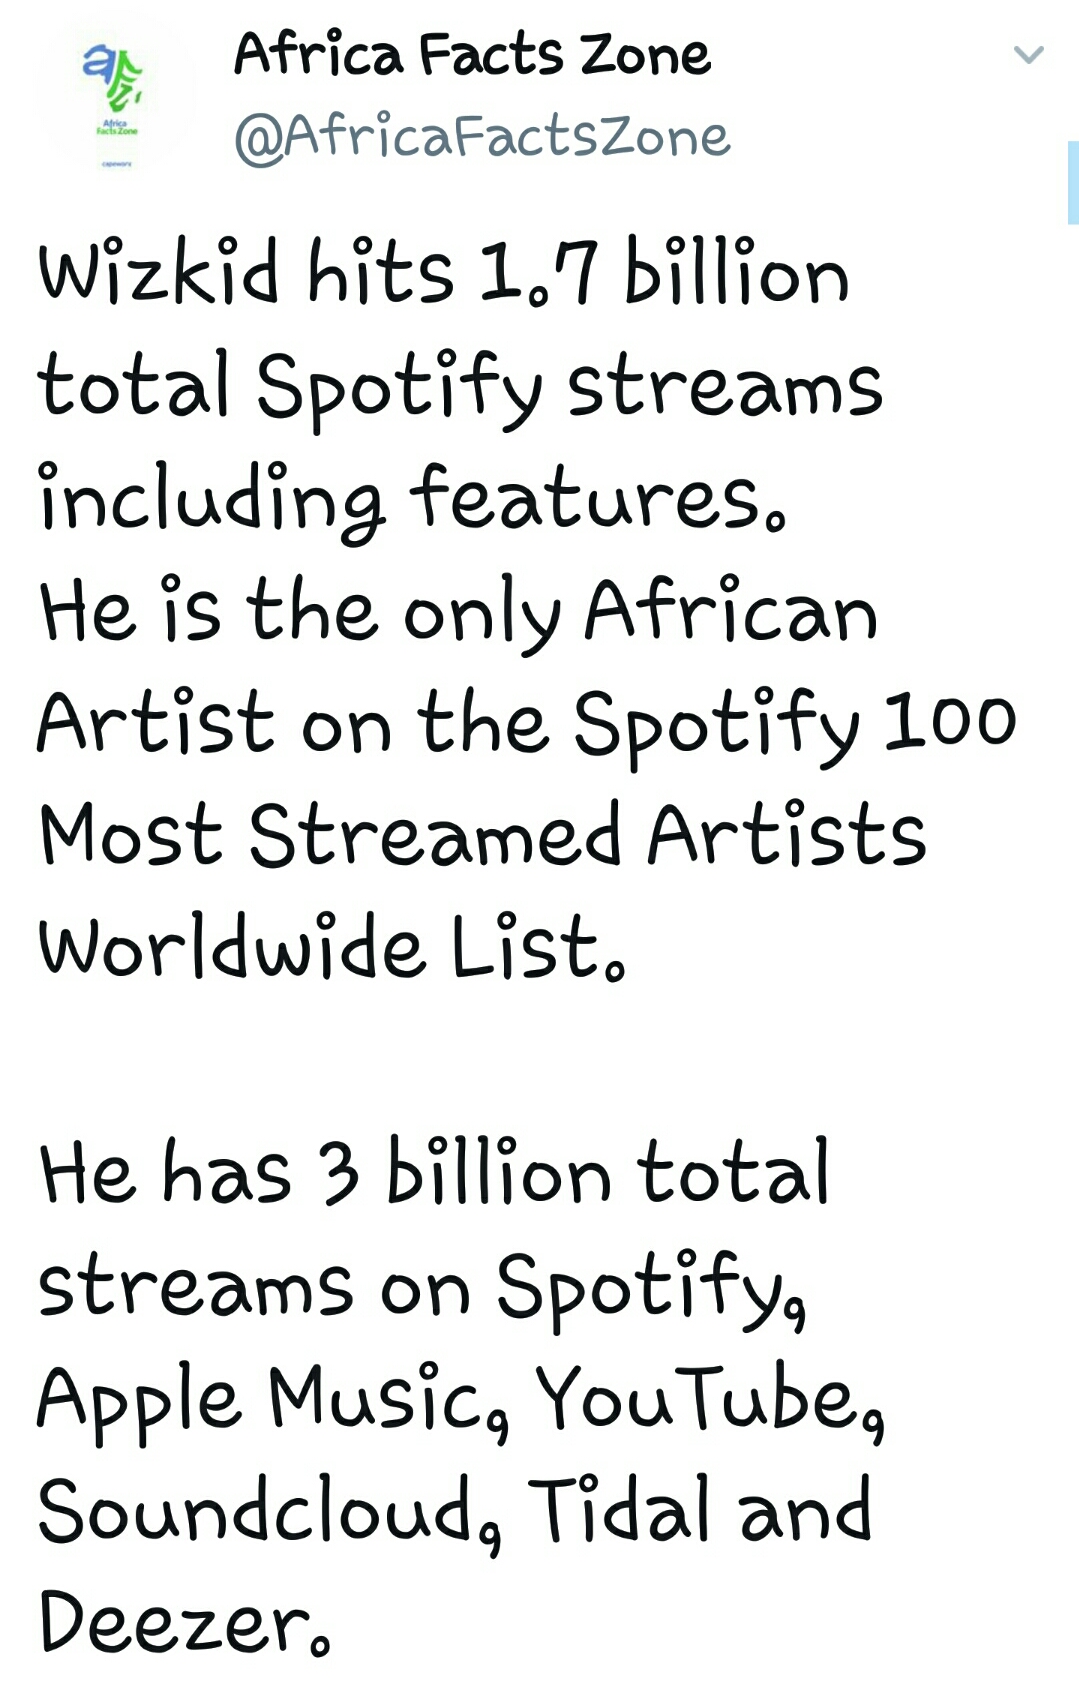 Wizkid gains 1.7 billion total Spotify streams